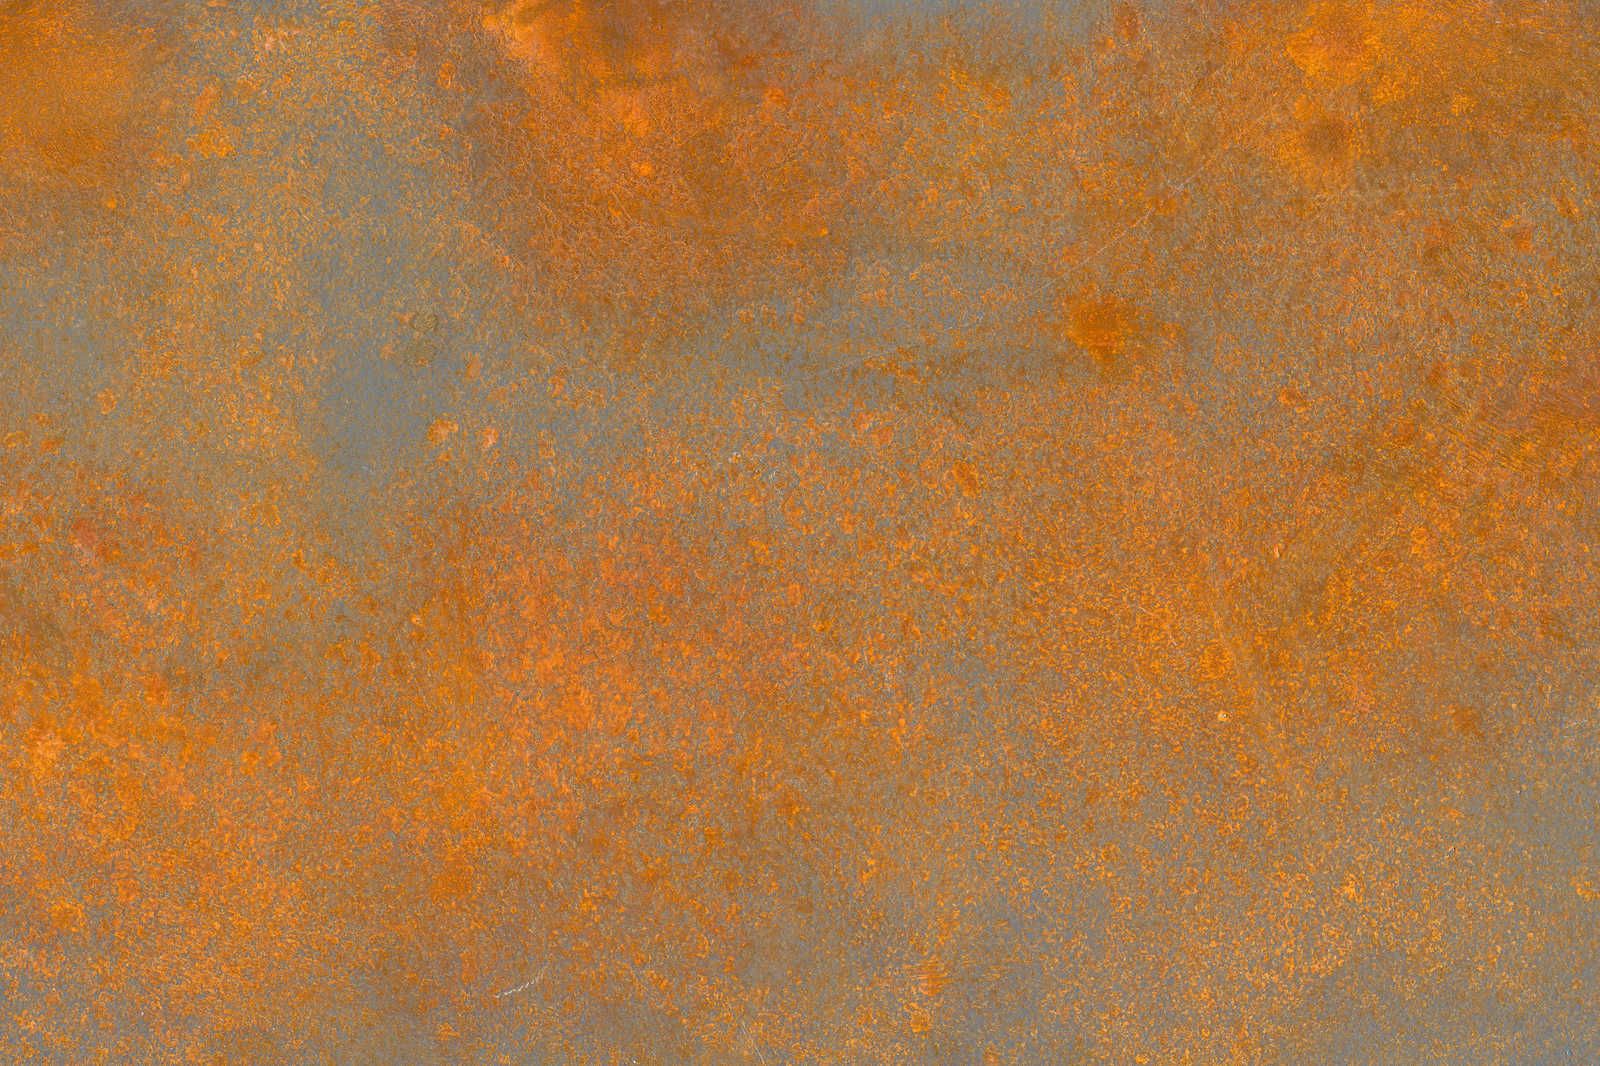             Rust Optics Canvas Painting Orange Brown with Used Look - 0.90 m x 0.60 m
        